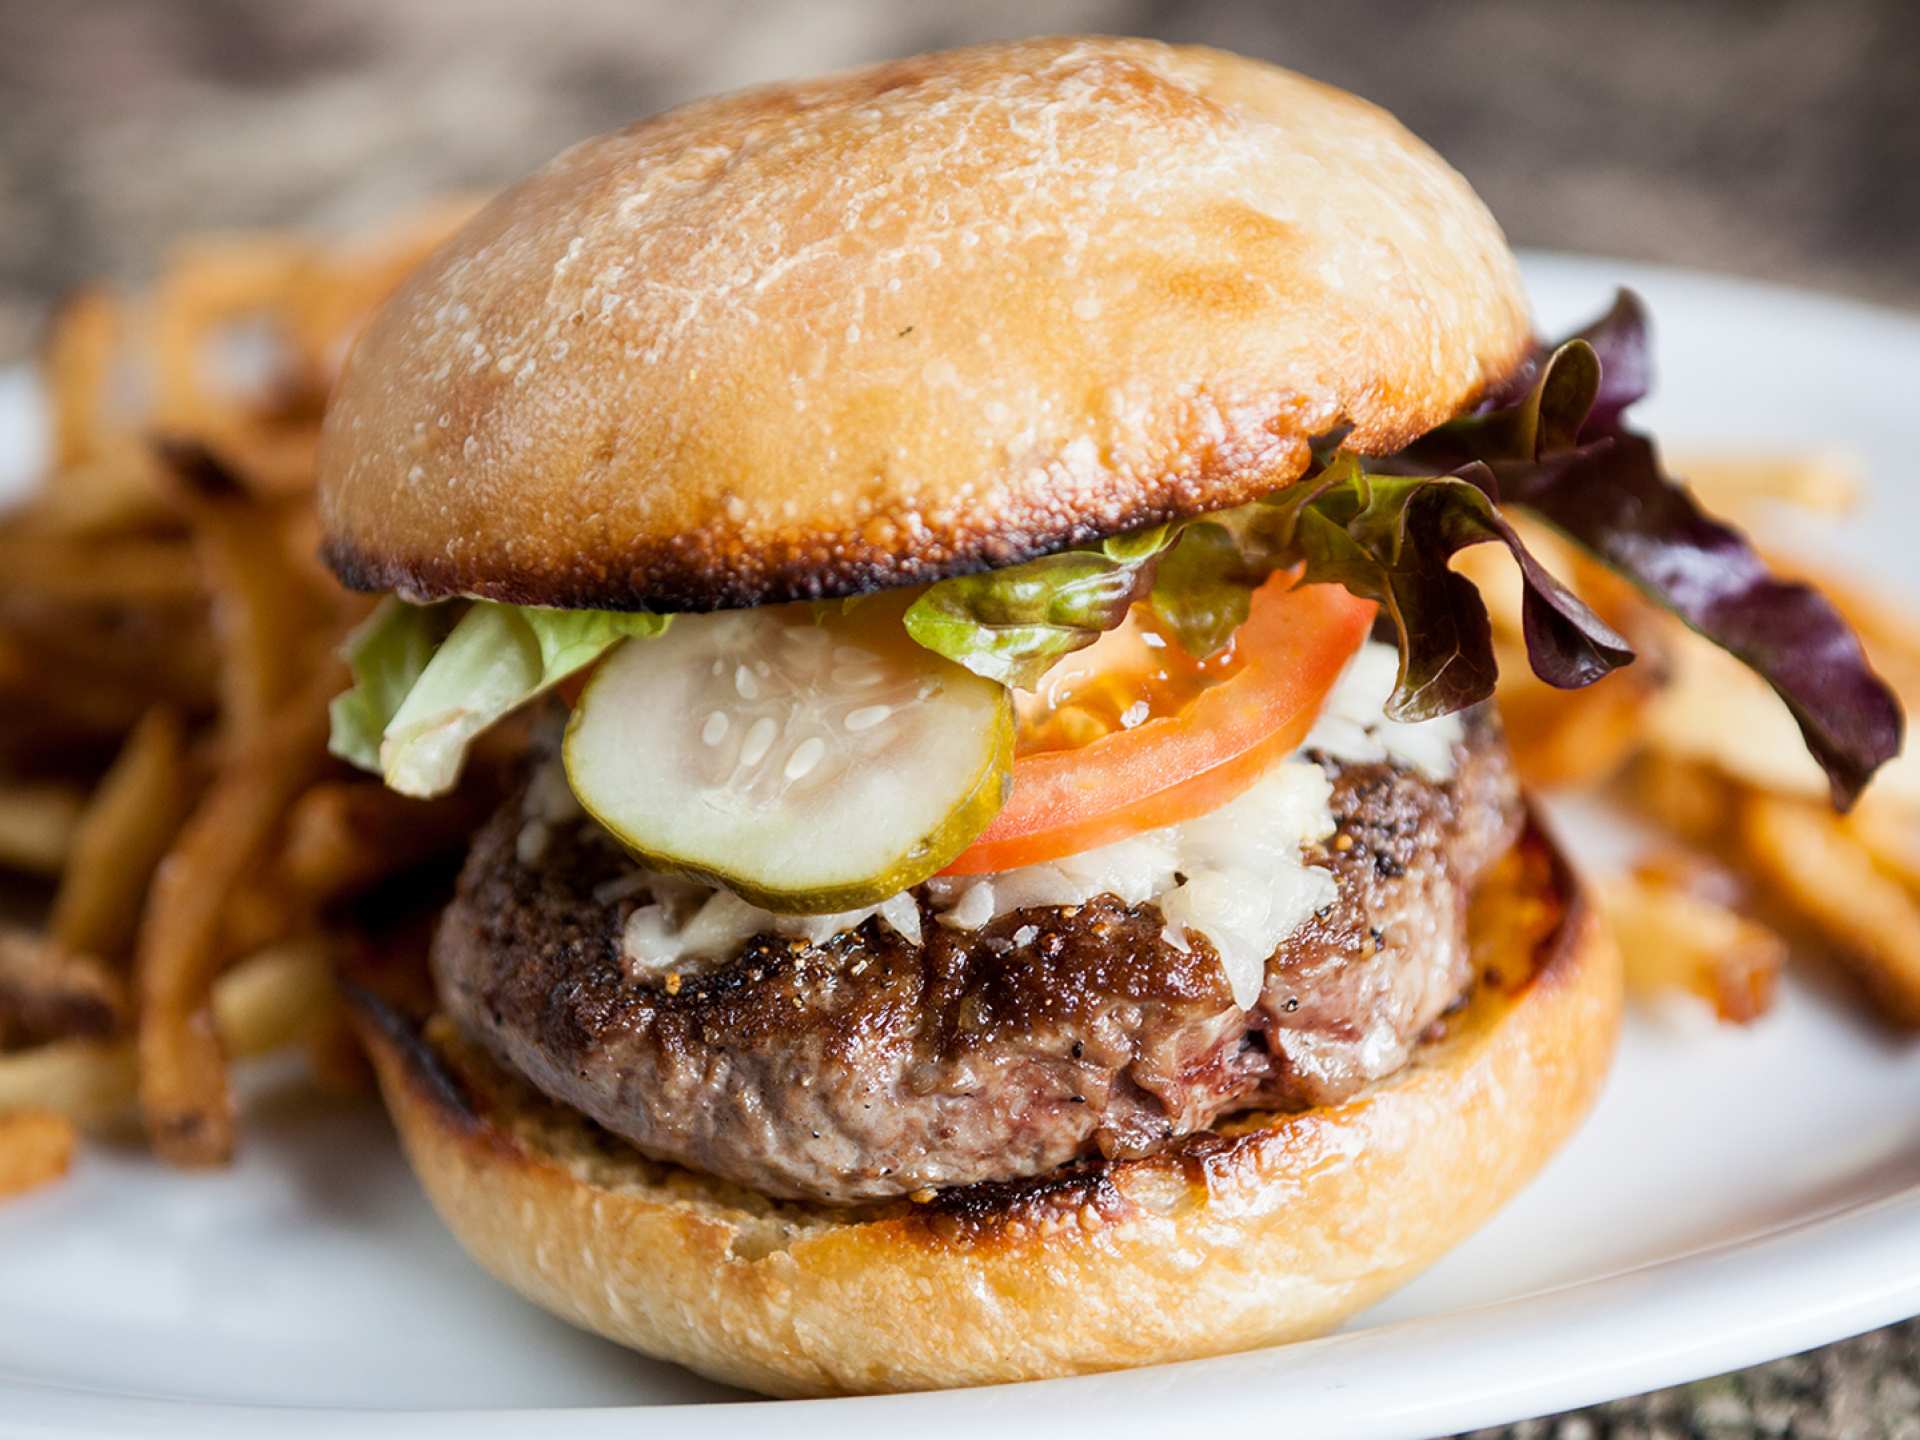 Toronto's best burgers | The Game Burger at Antler